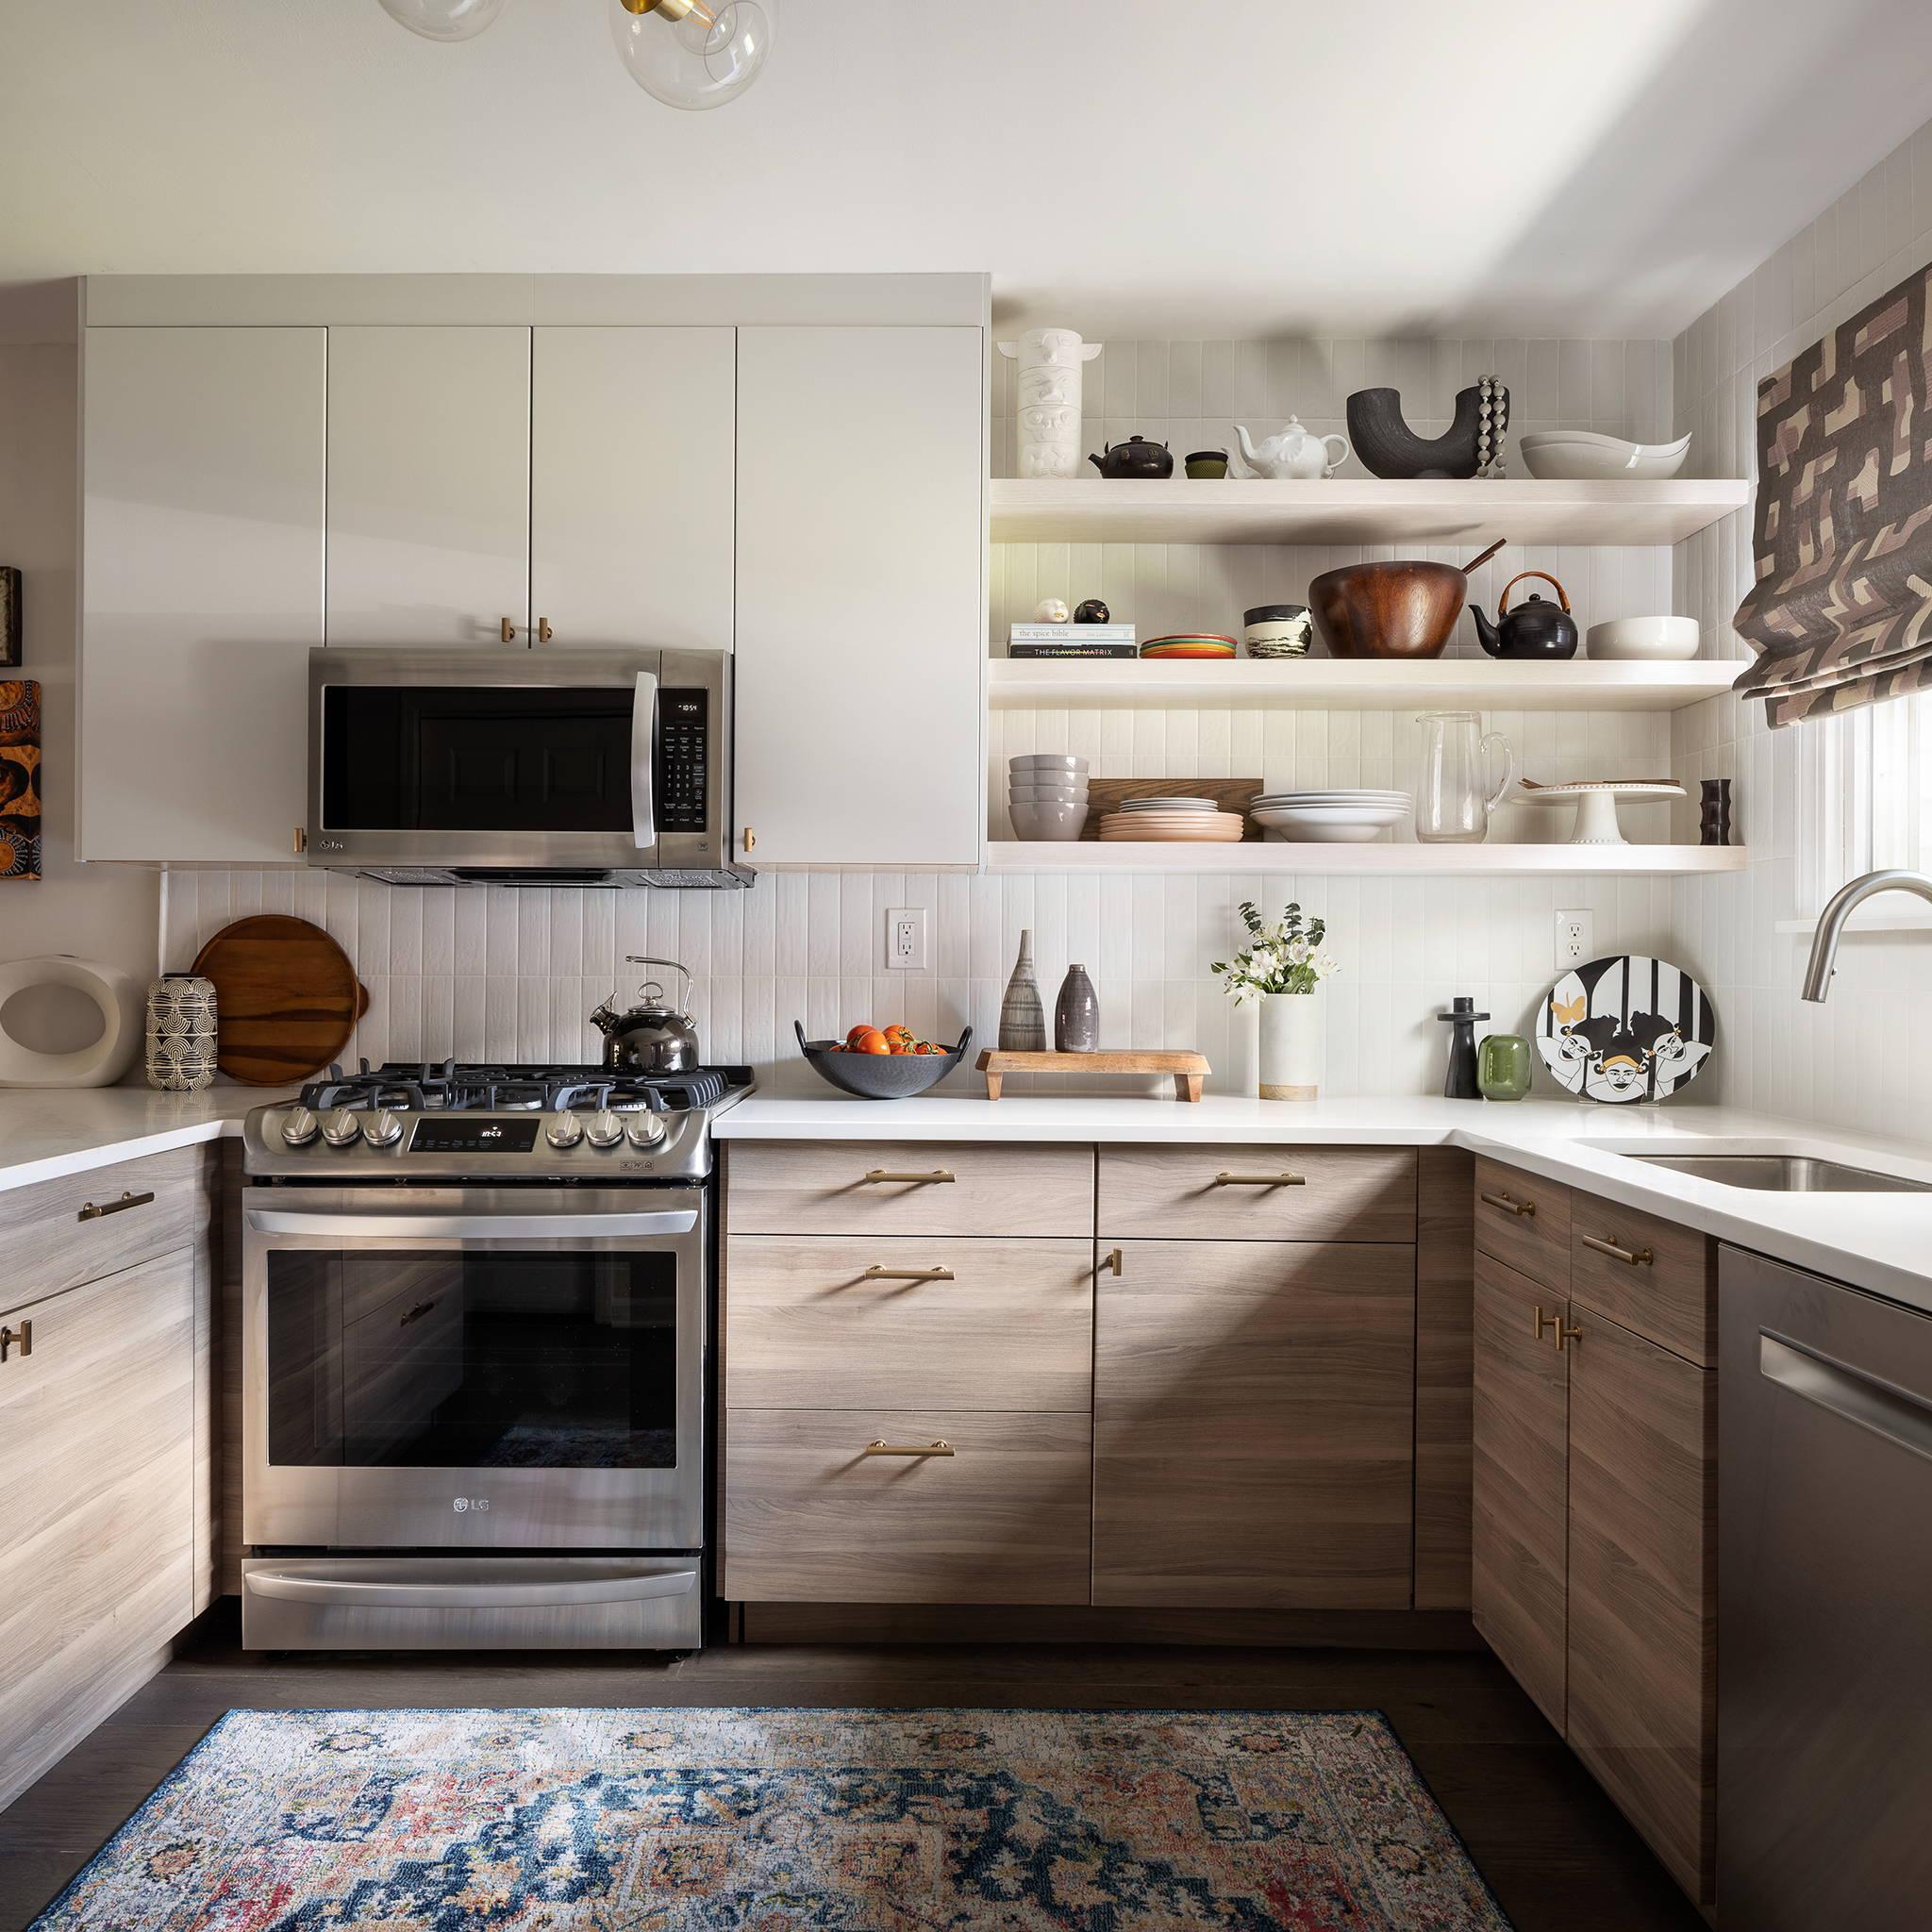 How To Style Kitchen Shelves With Beth Diana Smith – 54kibo